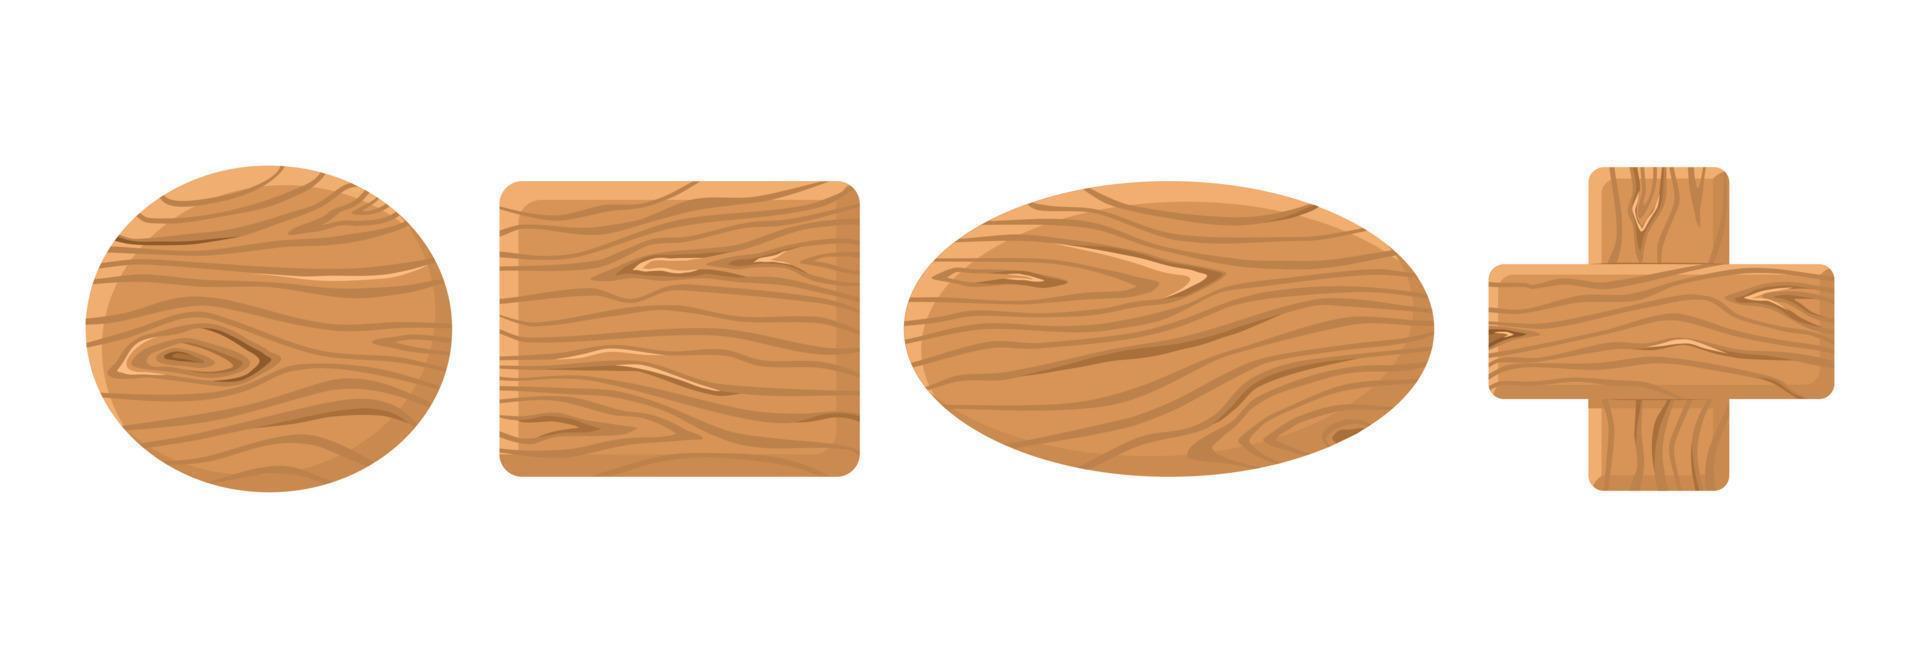 Botones de madera de diferentes formas sobre fondo blanco aislado. elementos de interfaz gráfica de usuario de vector de dibujos animados. marco de tablilla de madera.